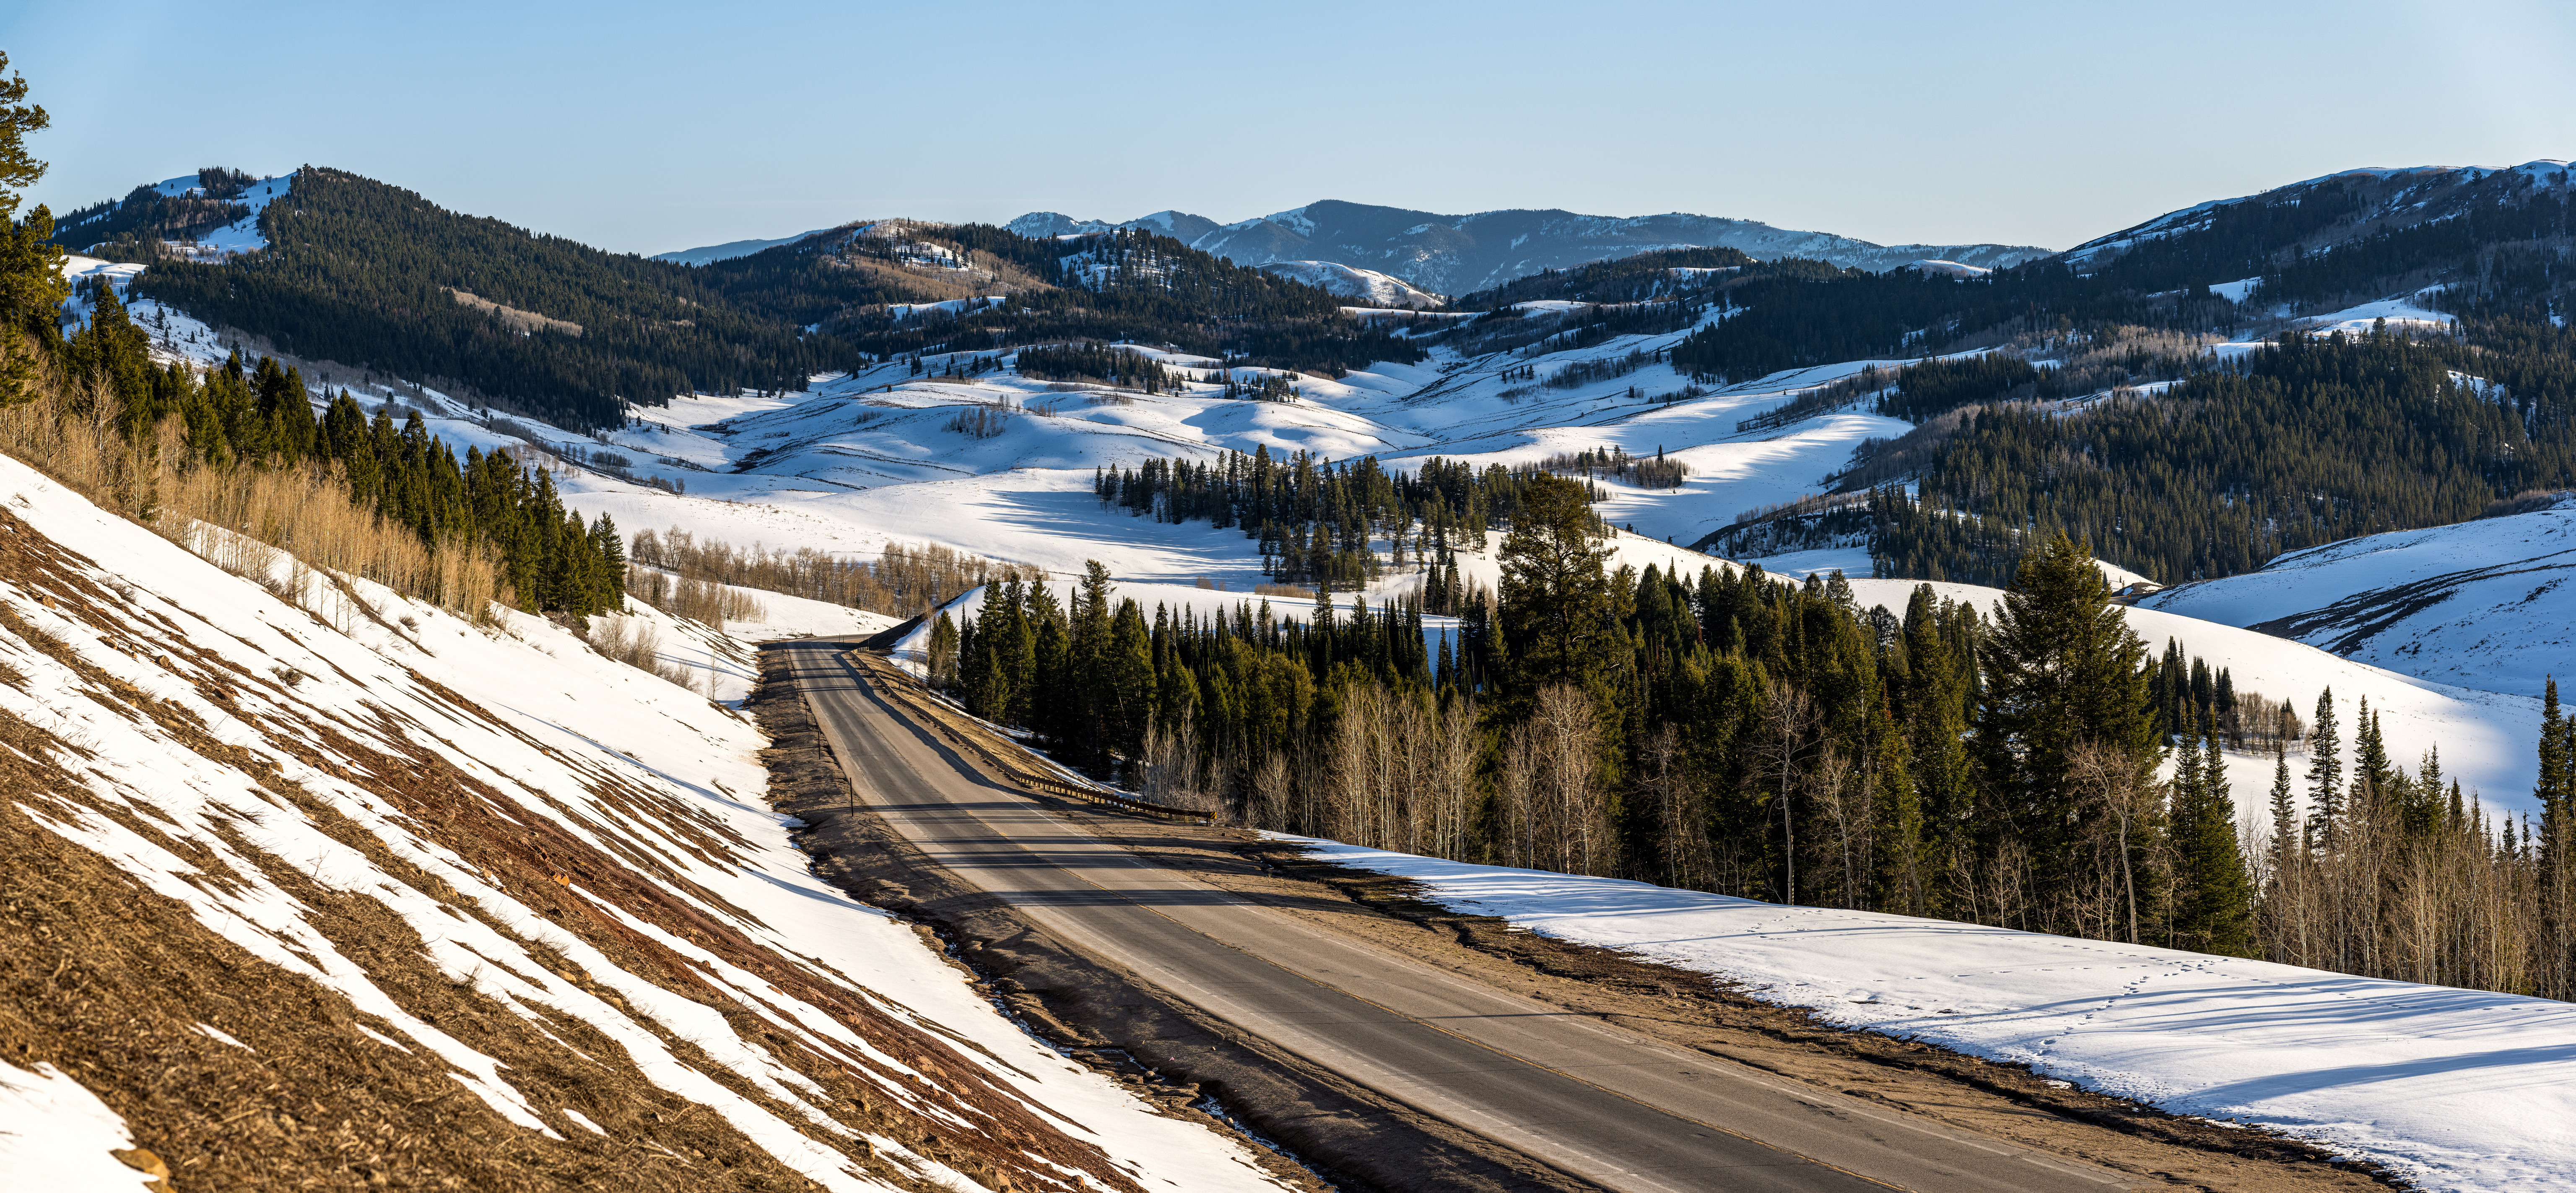 Фото америка Wyoming Горы Природа Снег Дороги 6144x2845 США штаты гора снега снегу снеге